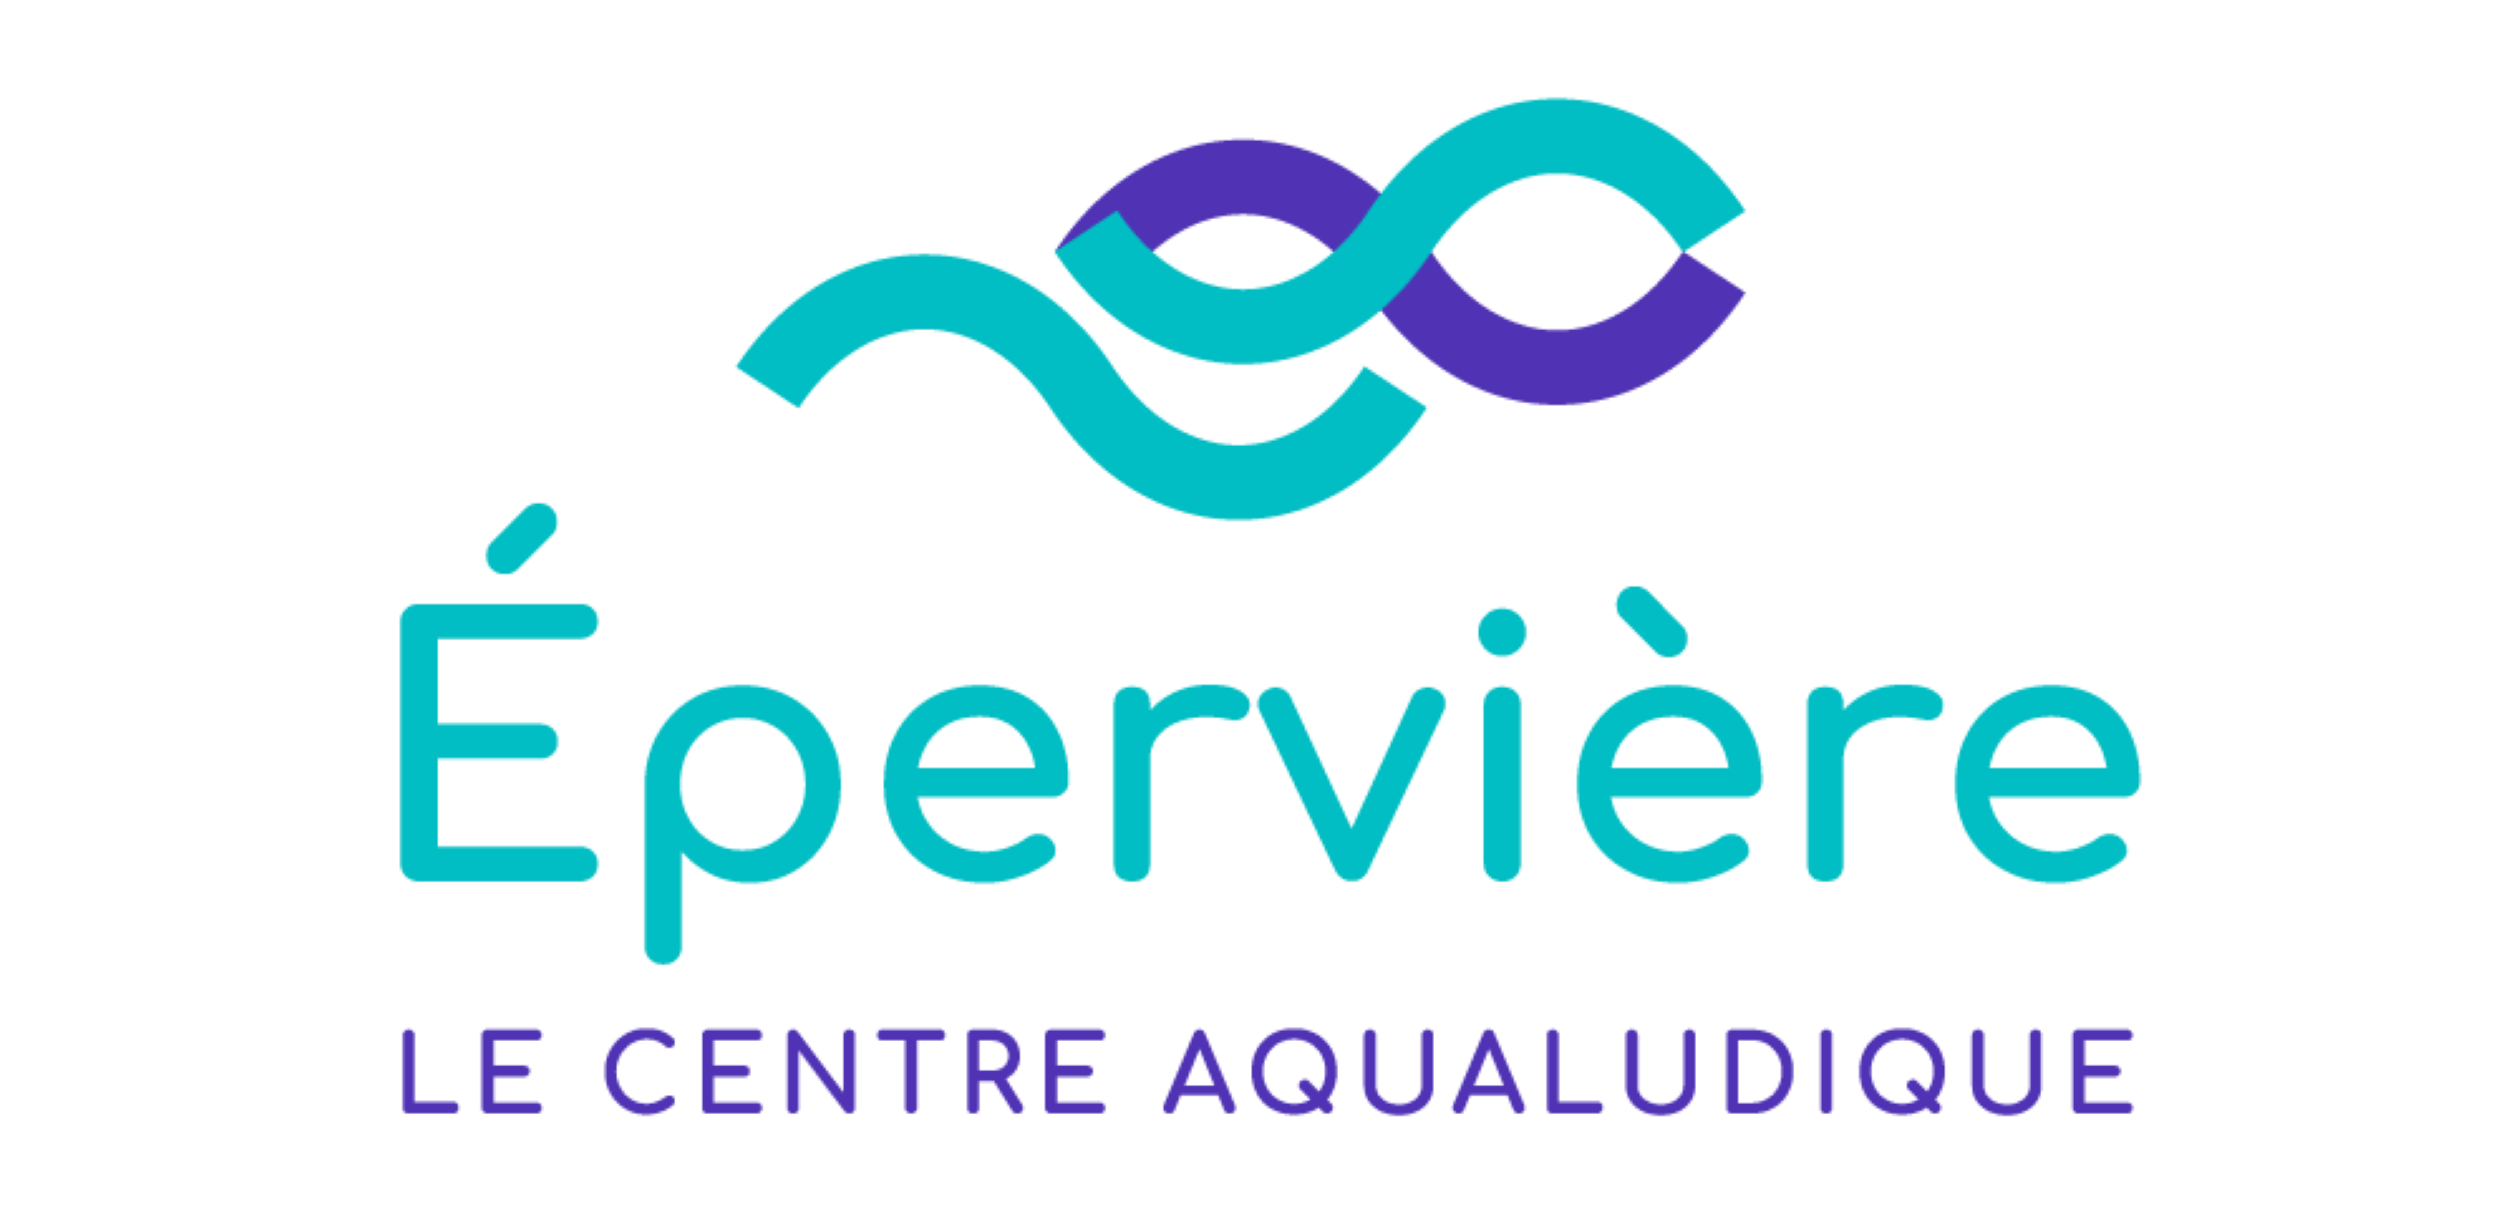 Logo-Eperviere-UAS-RVB-1